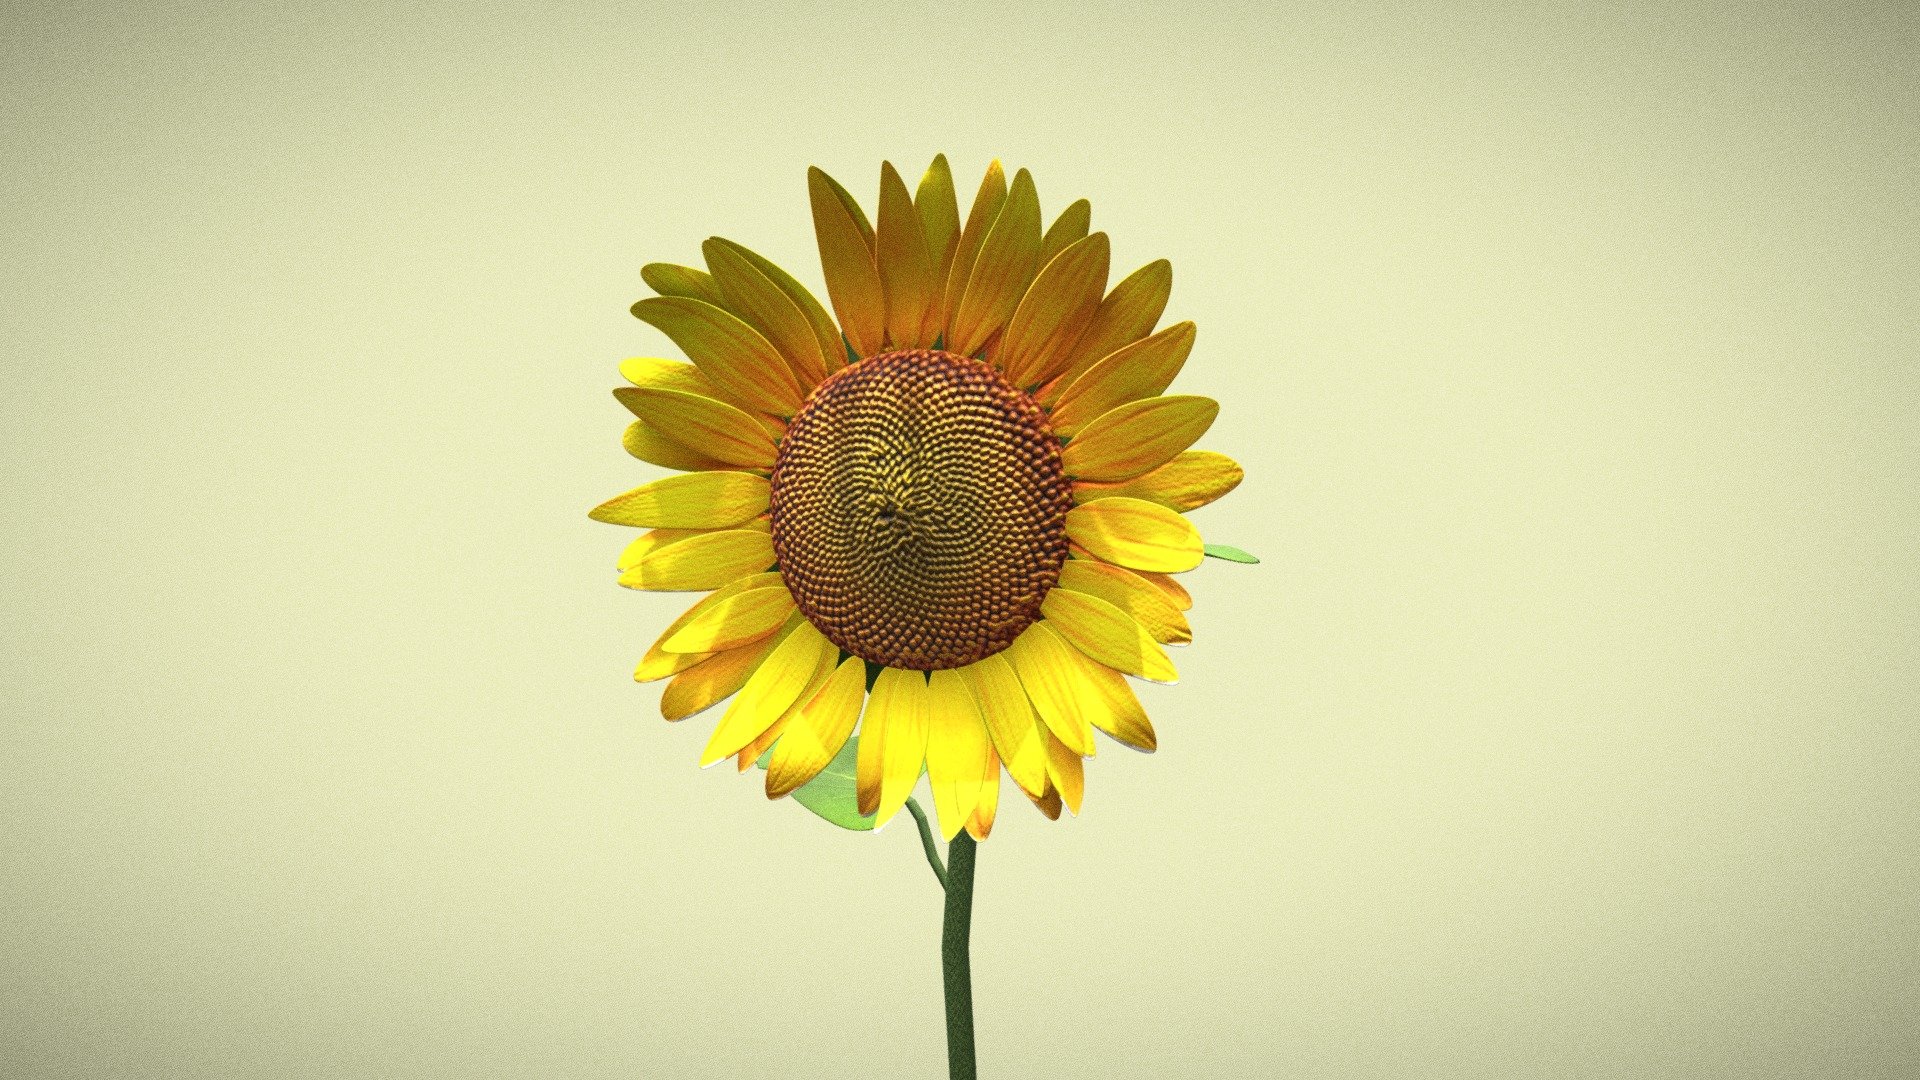 1. Sunflower 3D Acrylic Nail Art Tutorial - wide 7